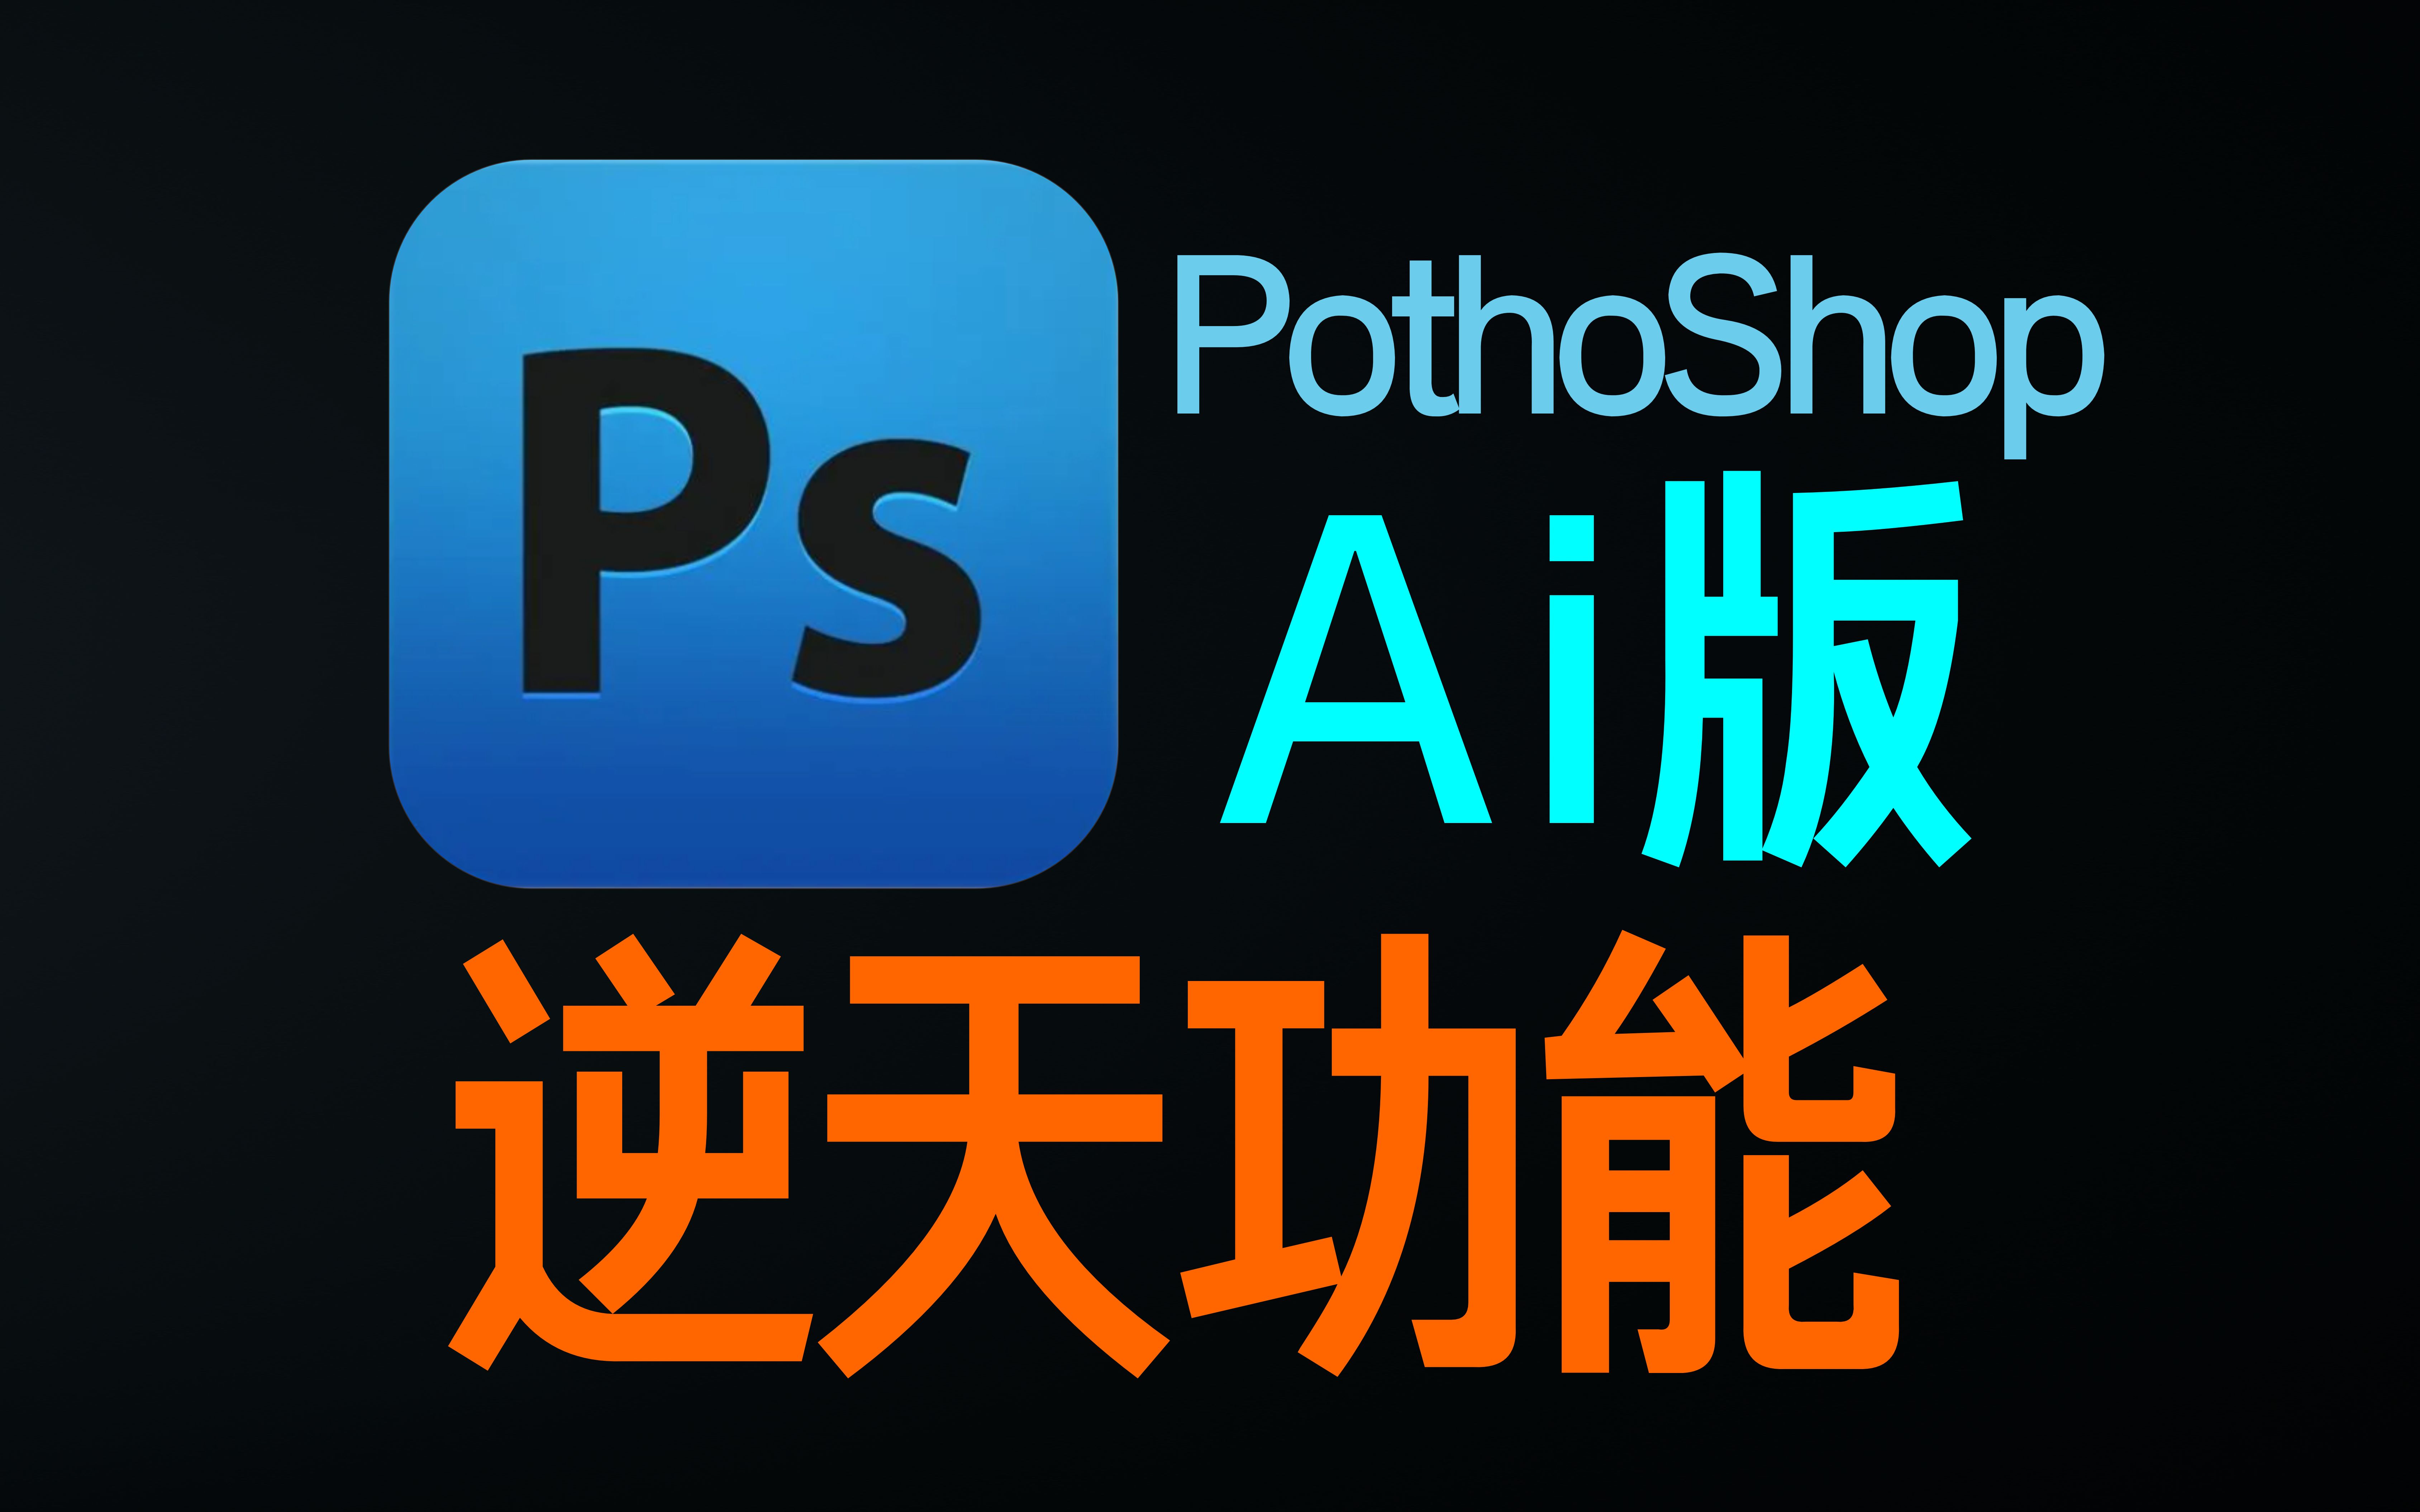 PothoShop AI版，让StableDiffusion不可控将变成尽在掌控